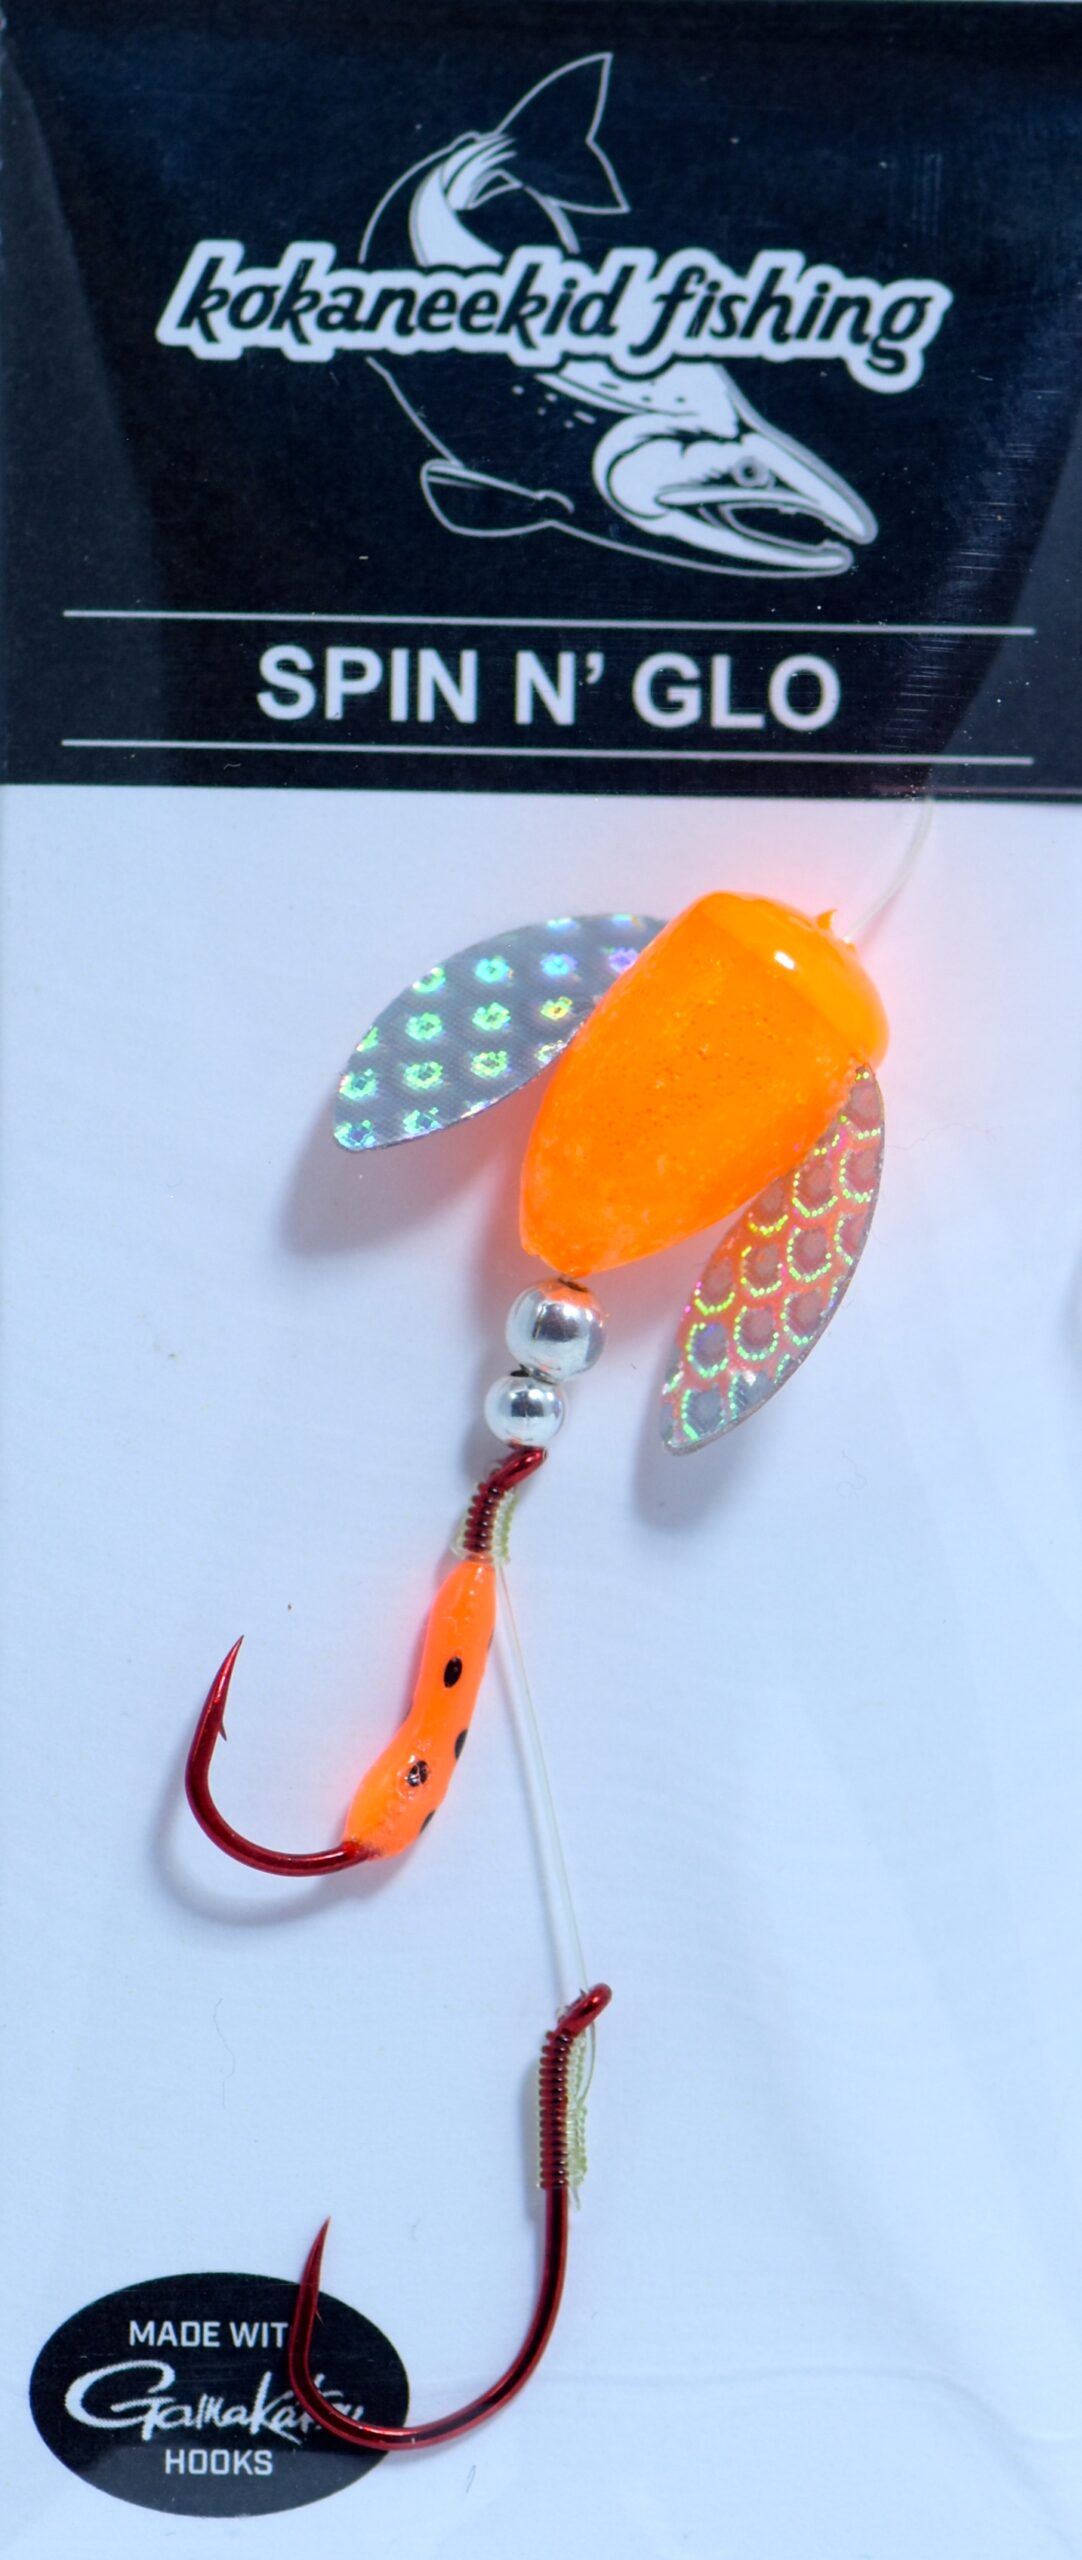 Spin N Glo – Glitter Orange #17 - Kokaneekid Fishing